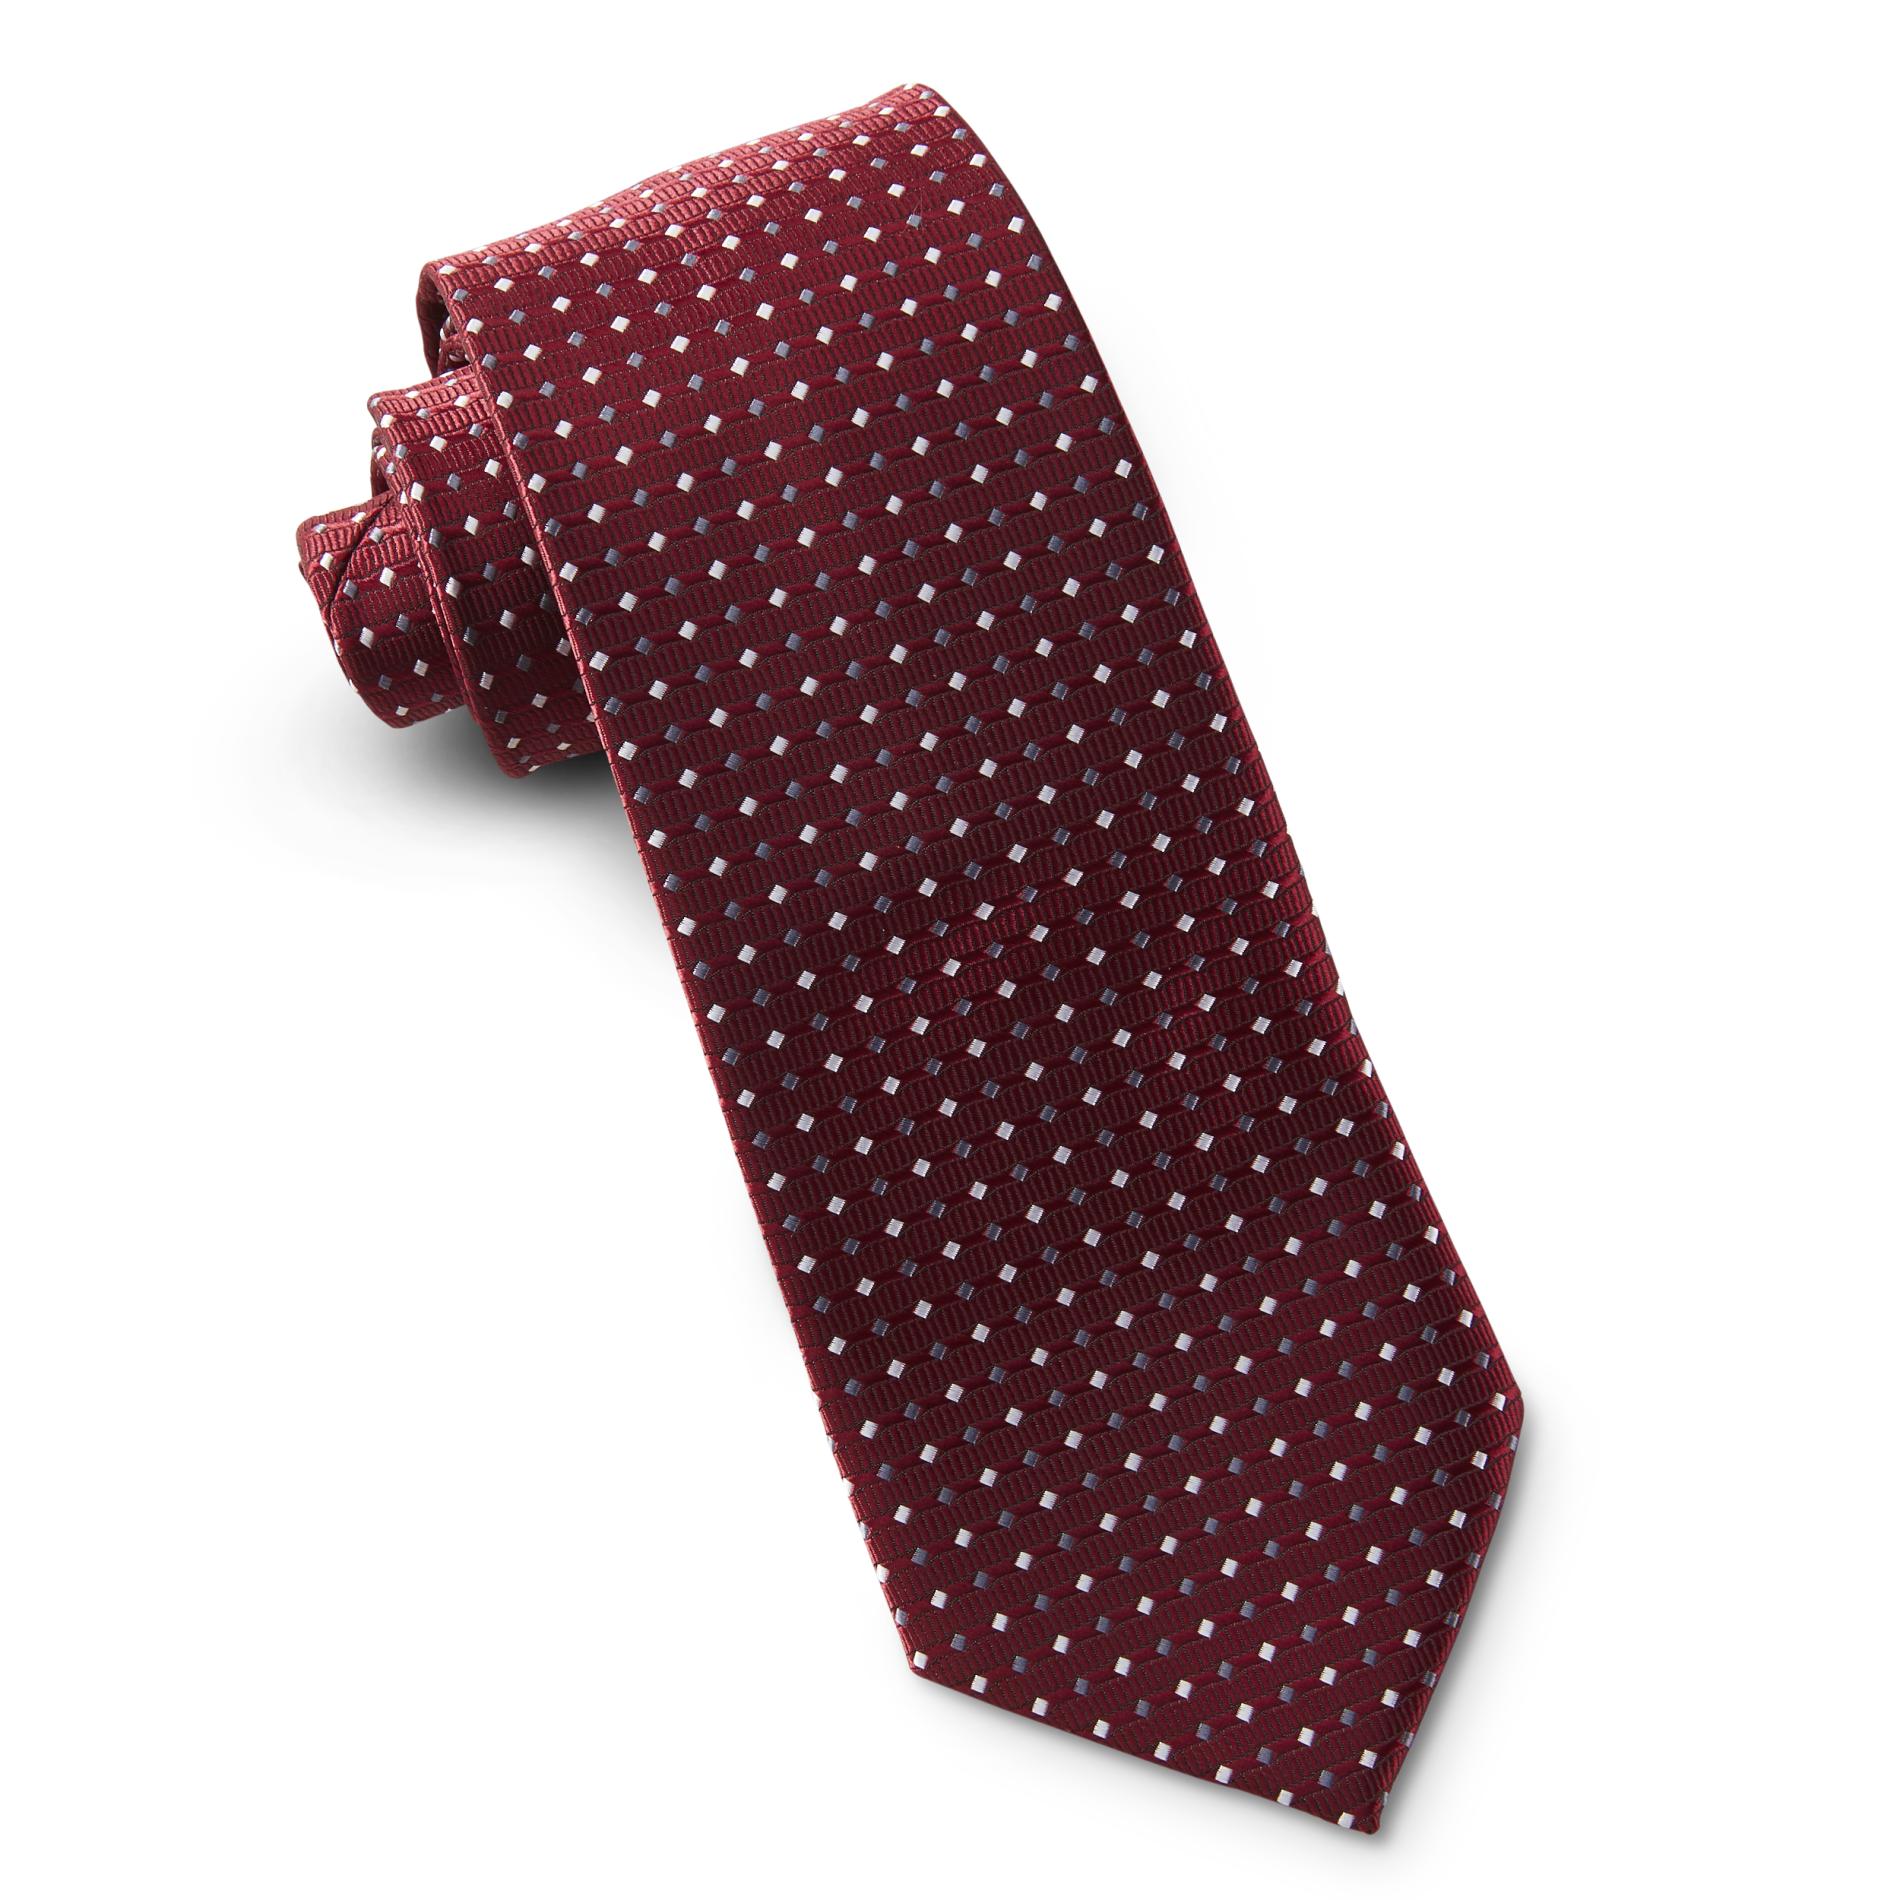 Basic Editions Men's Necktie - Dot